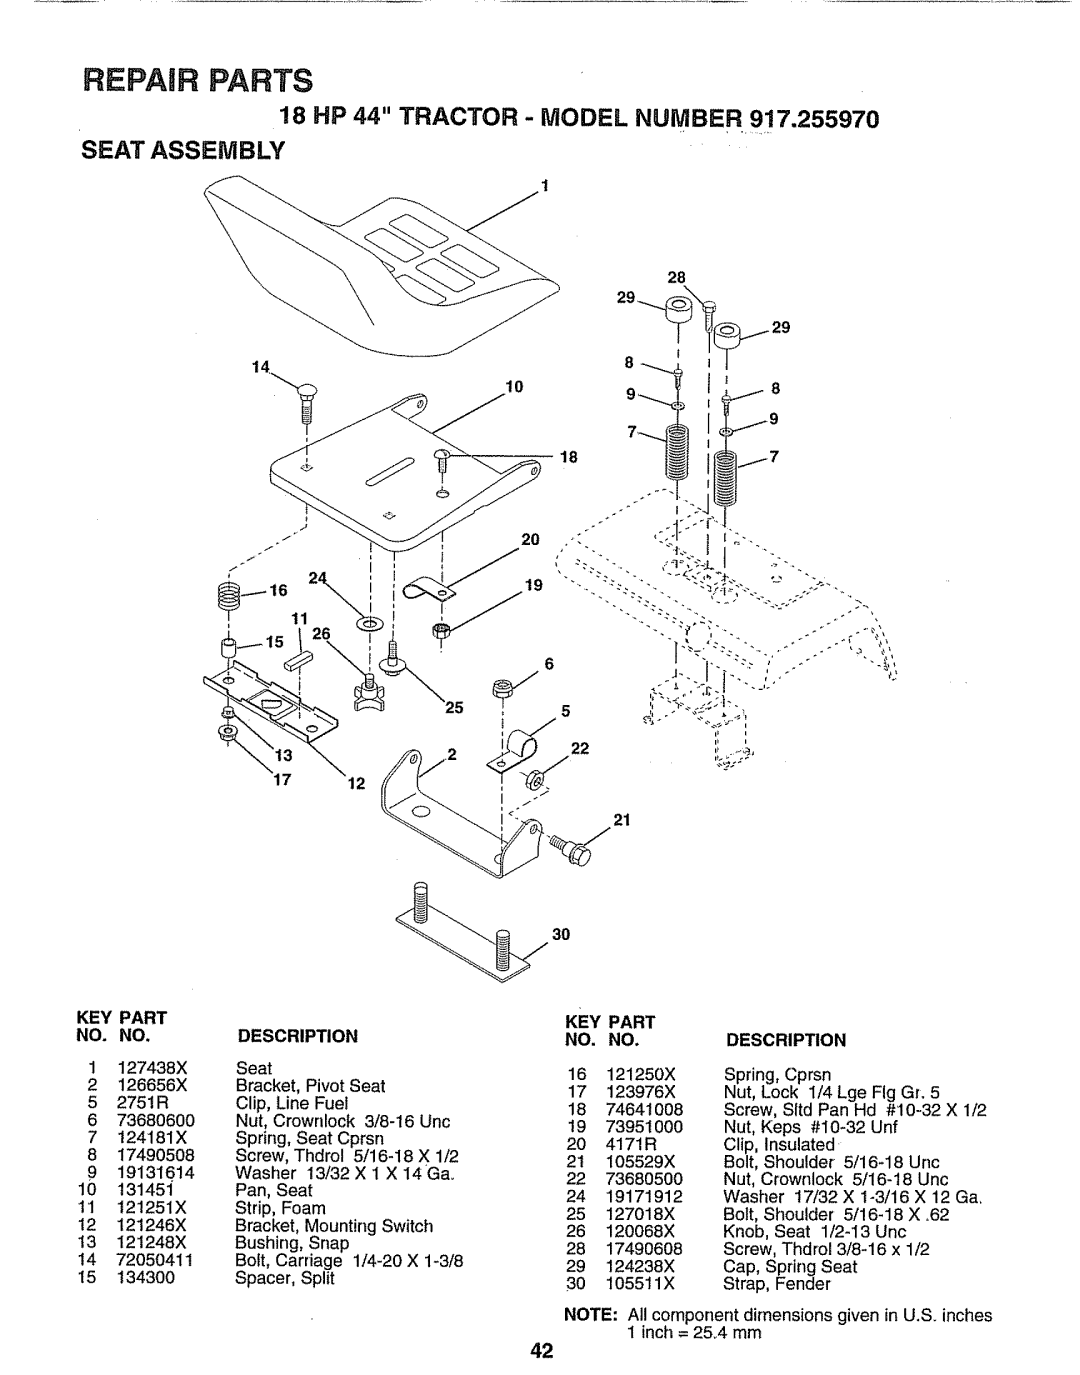 Sears 917.25597 18 HP 44 TRACTOR - MODEL NUMBER SEAT ASSEMBLY, Key Part No. No, Repair Parts, 7124181X, Description 